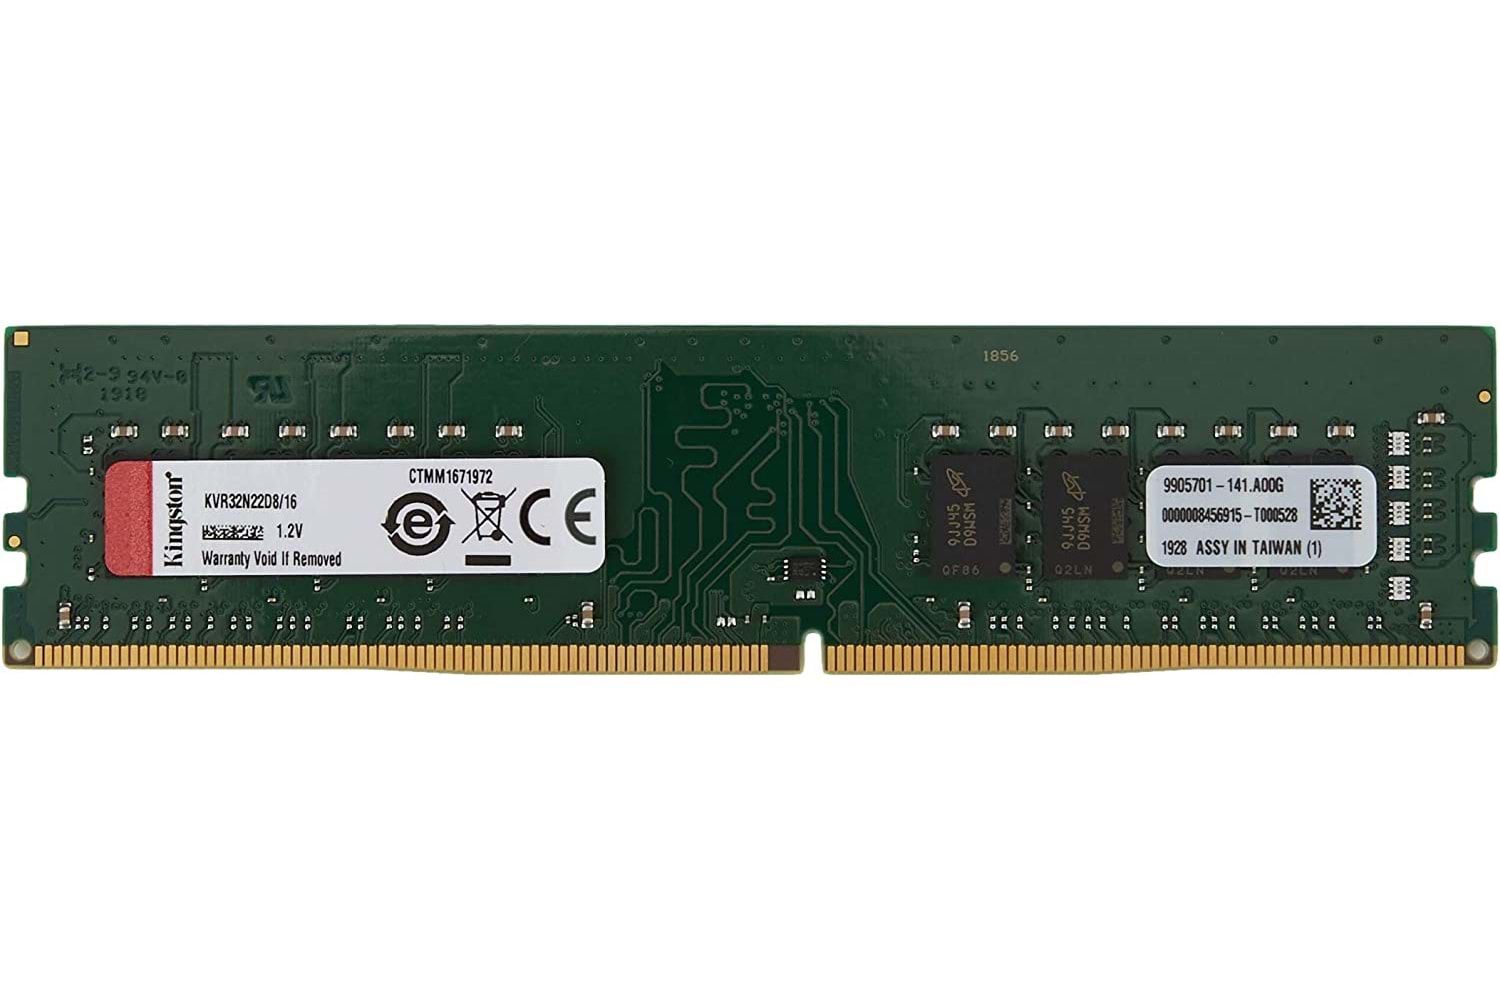 Kingston KVR32N22D8/16 16 GB DDR4 3200 MHz CL22 Ram